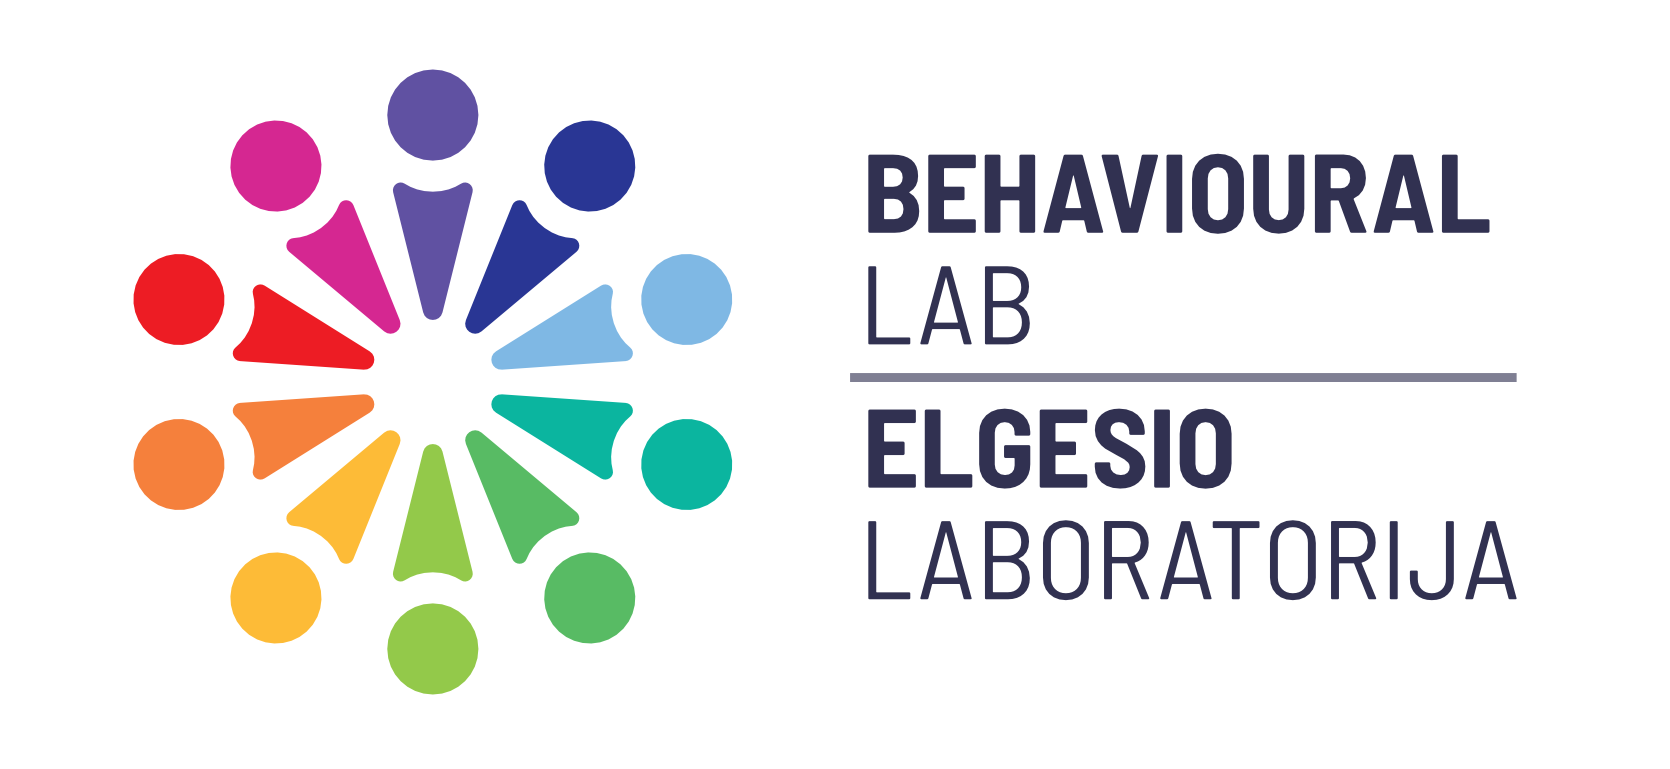 Behavioural Lab